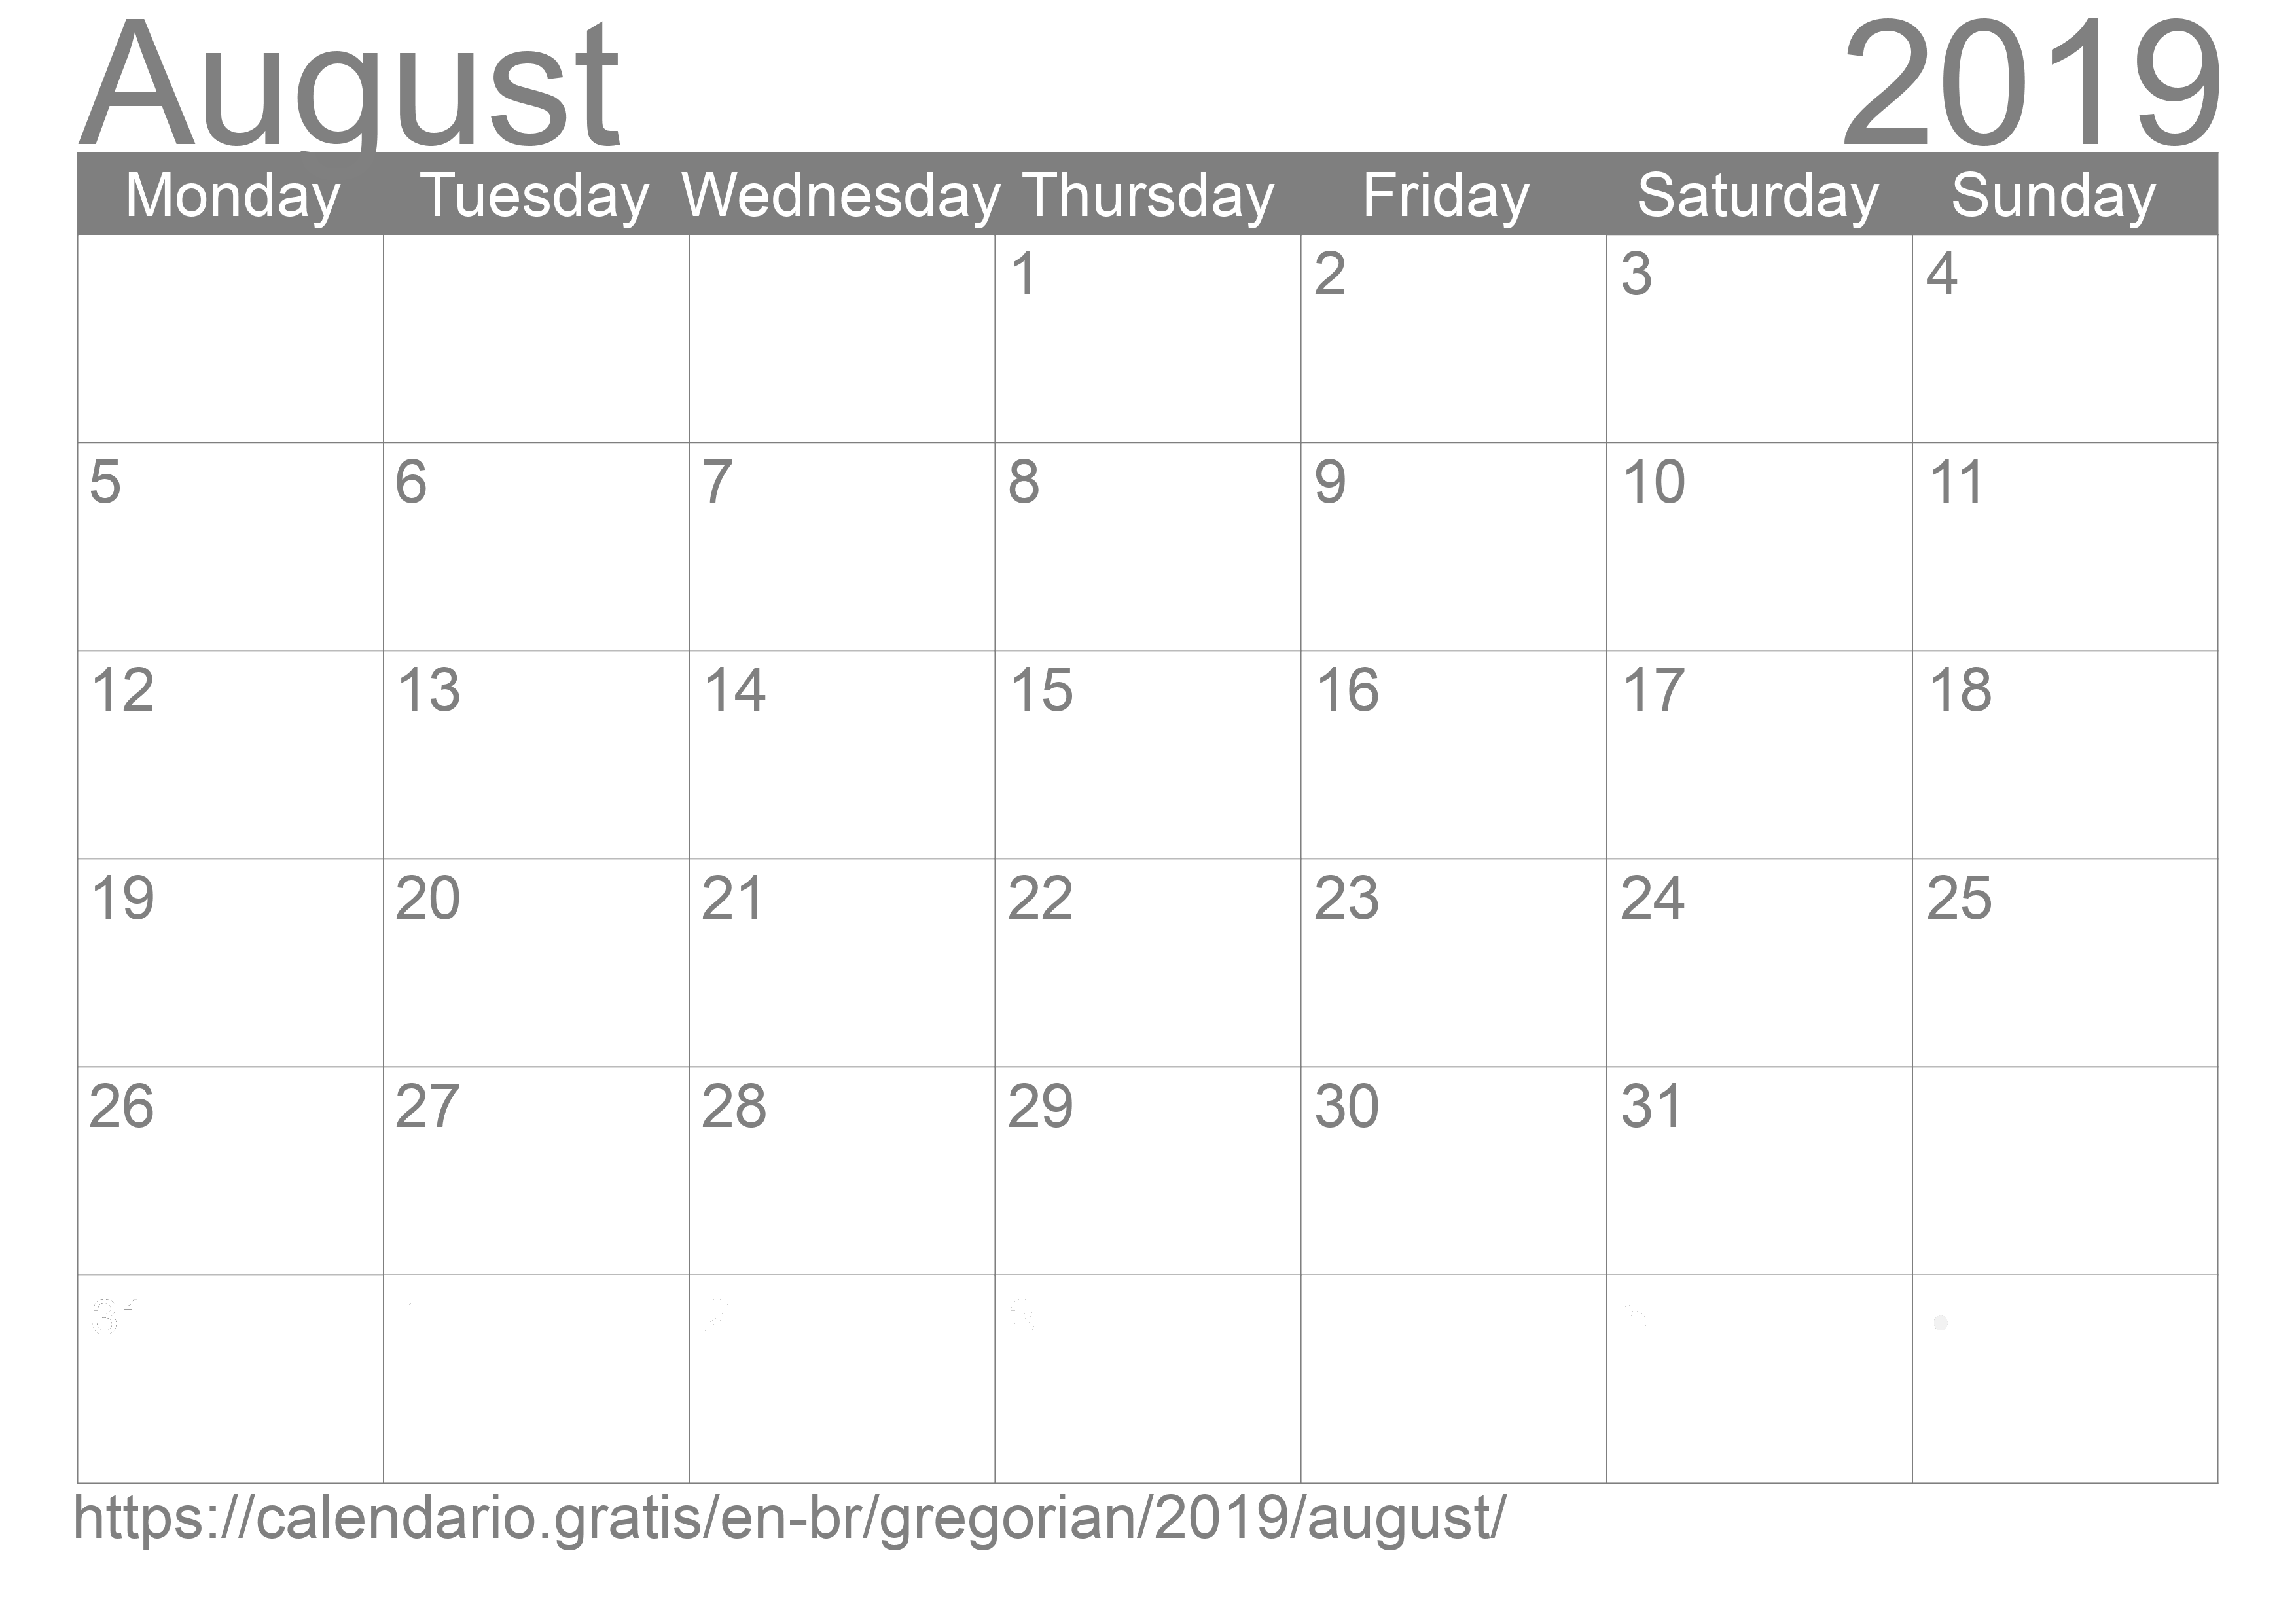 Calendar August 2019 to print